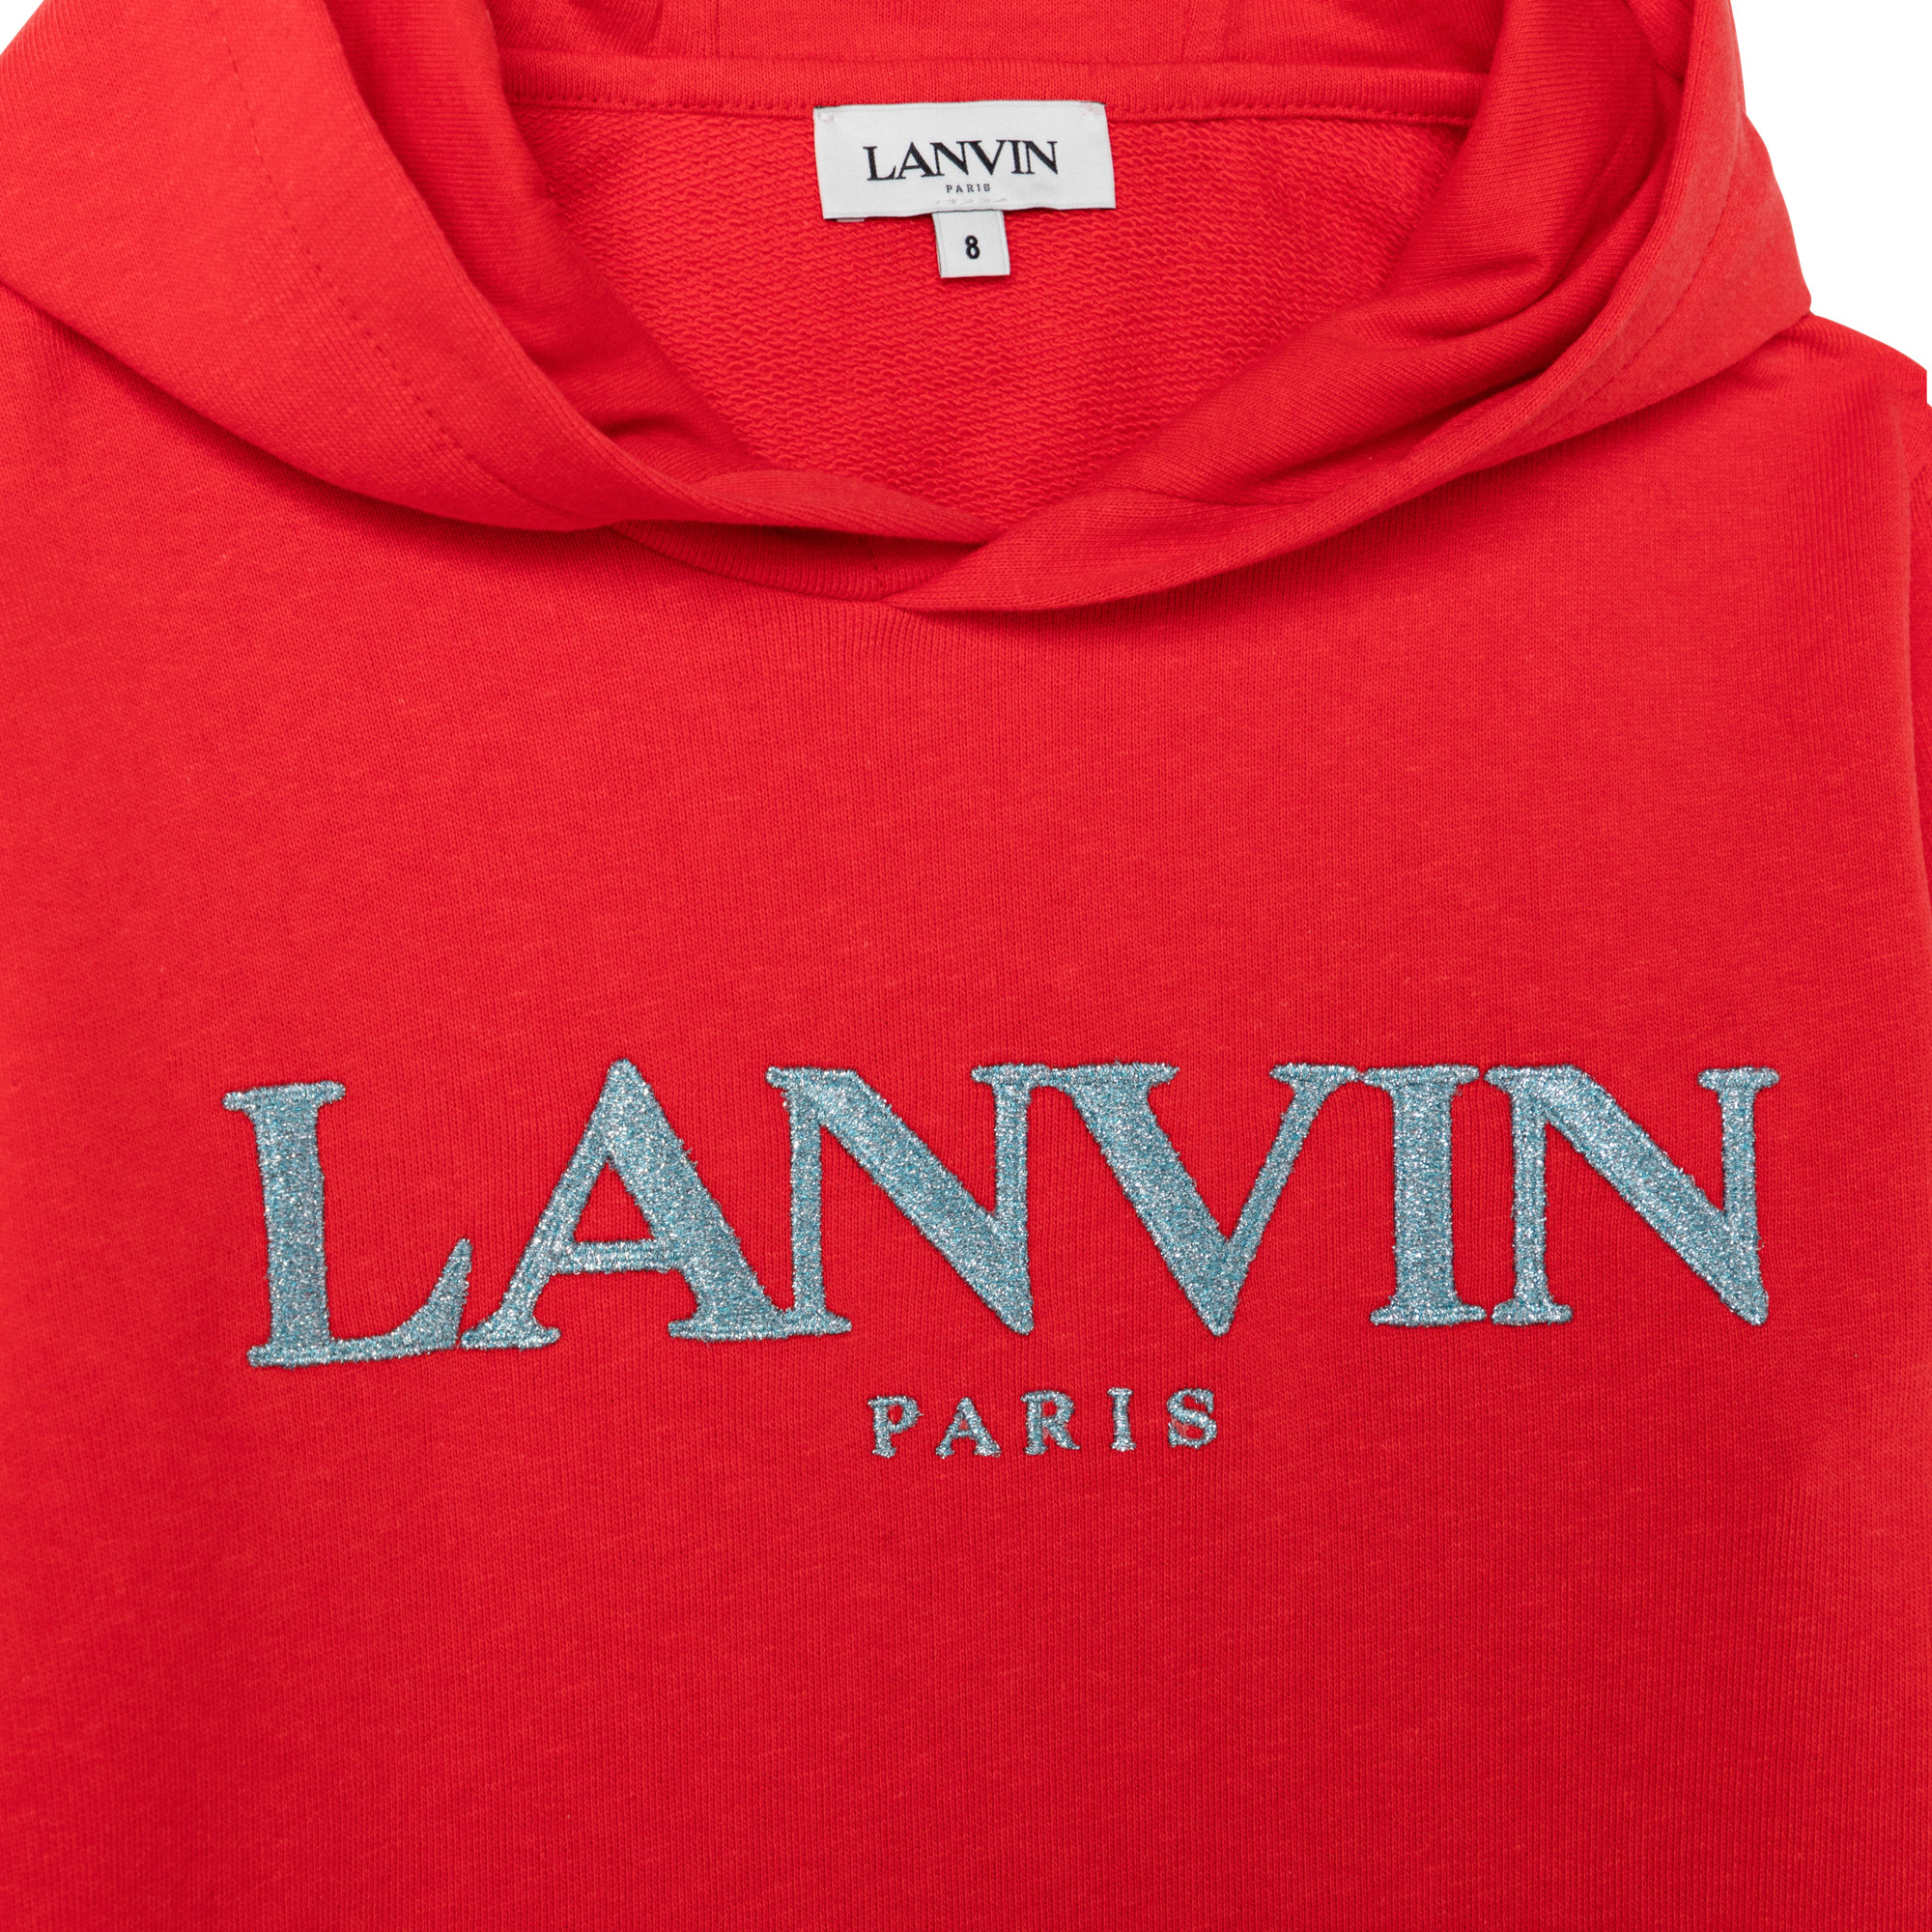 Hooded fleece sweatshirt LANVIN for GIRL